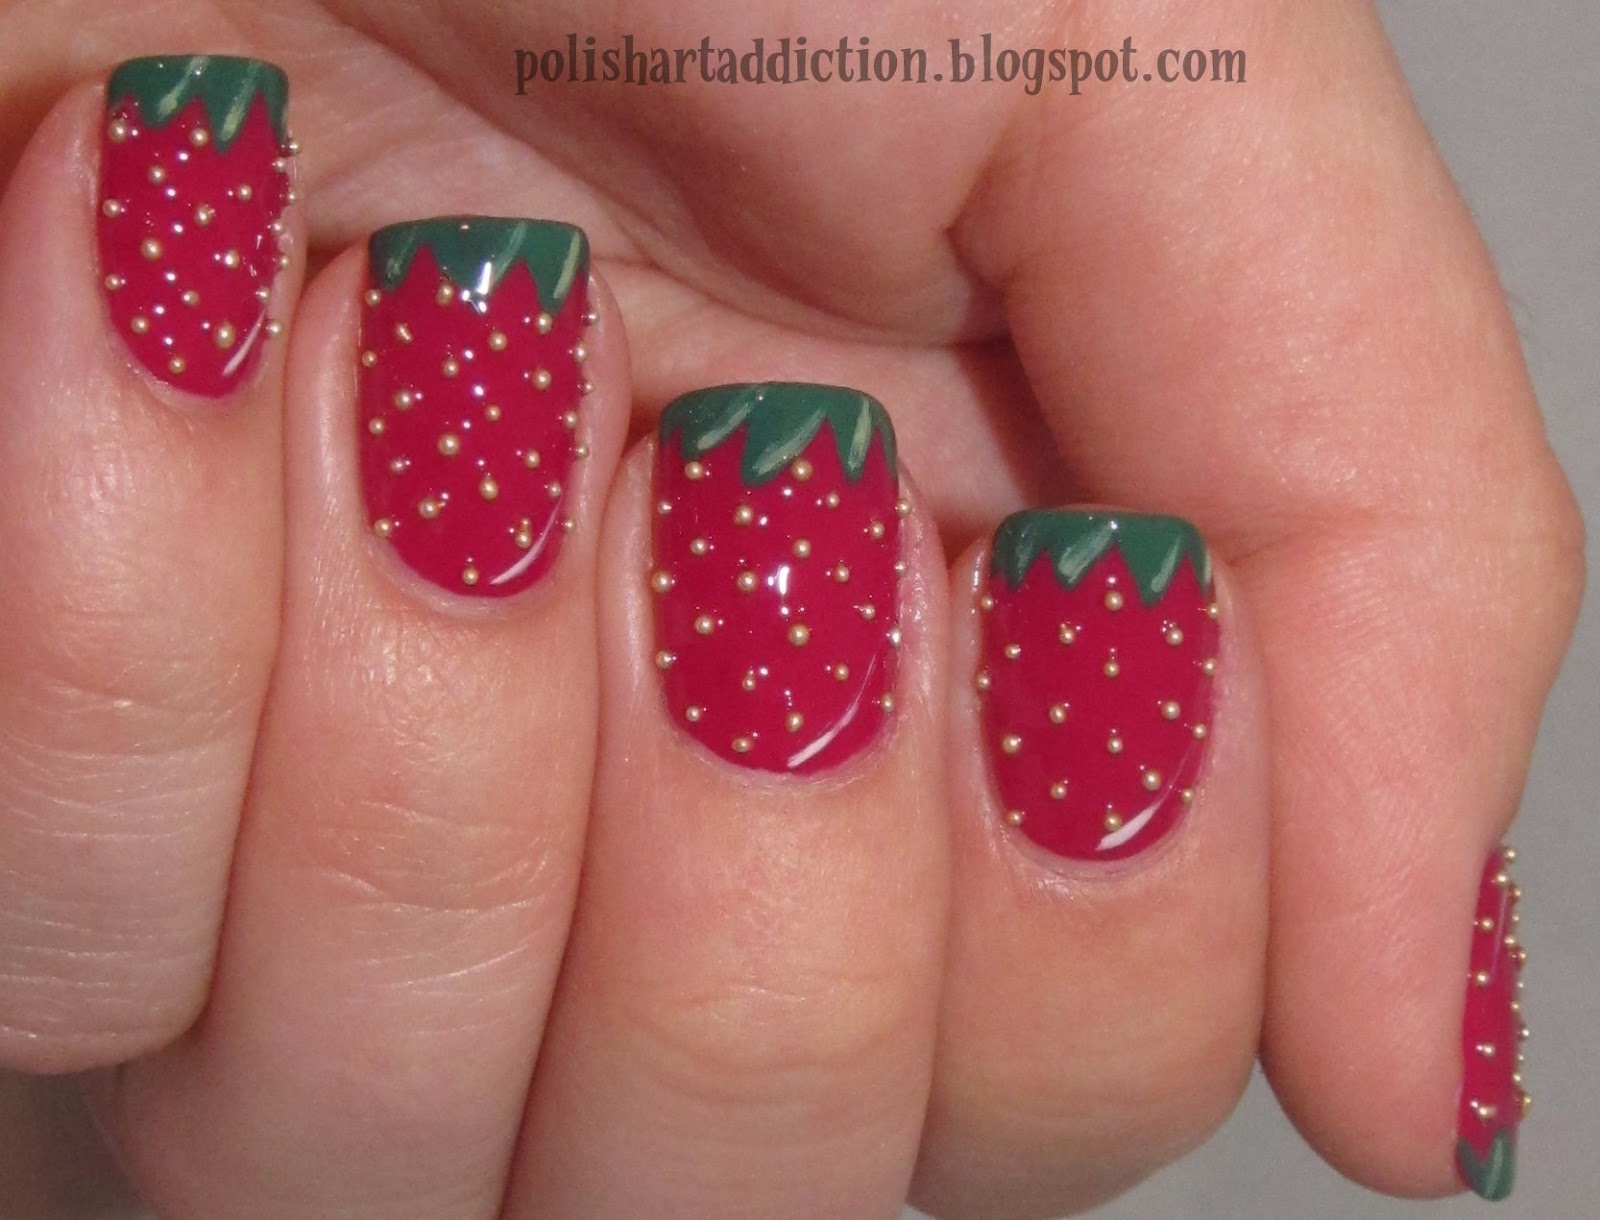 Strawberry Tart Nail Art Tutorial - wide 2